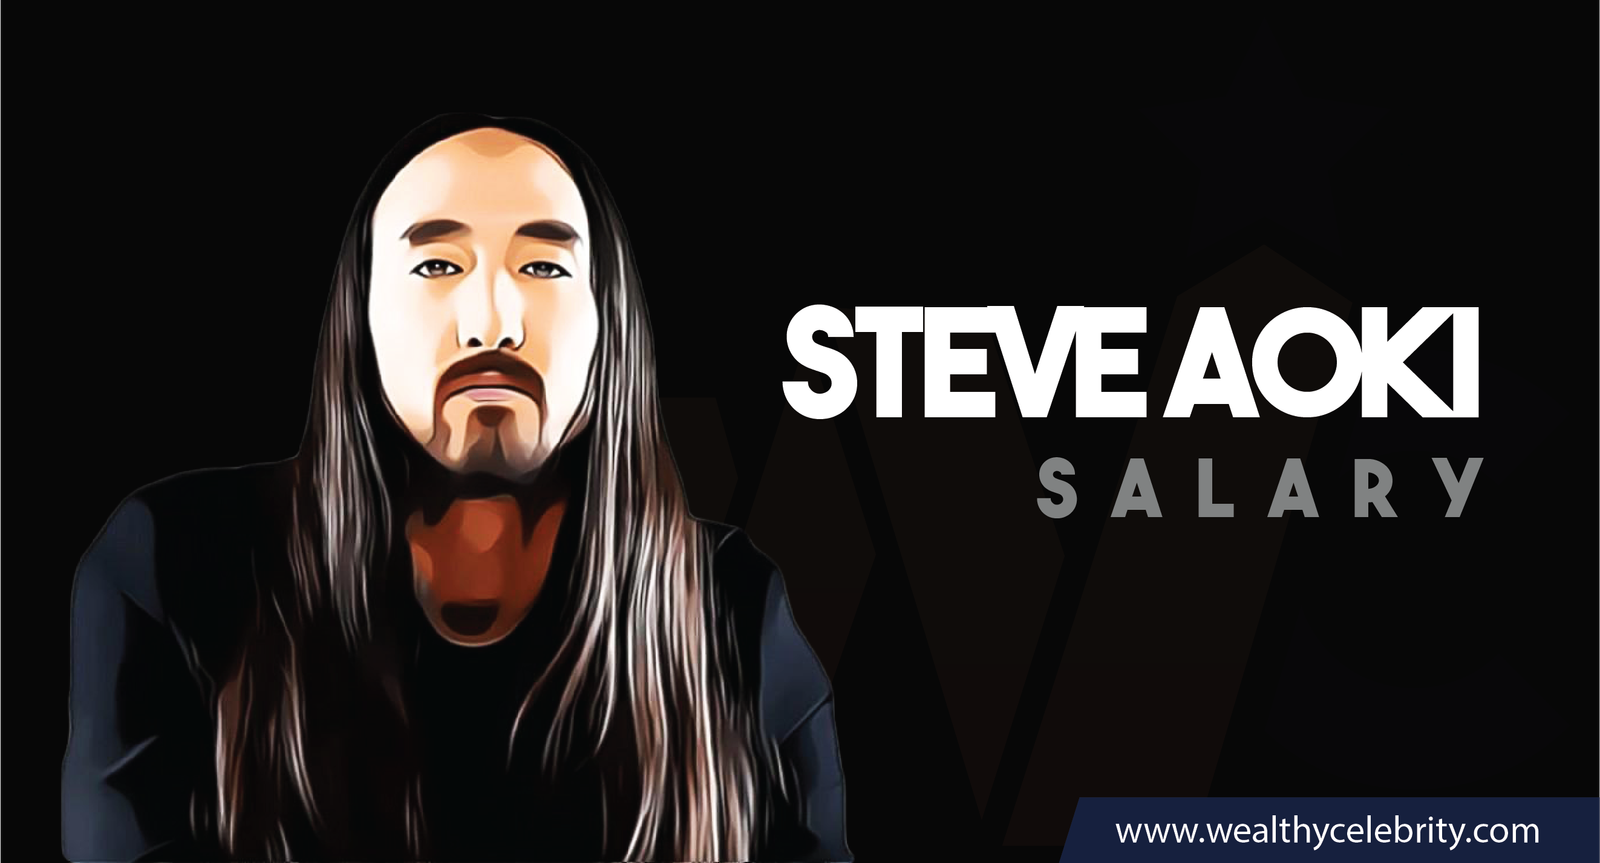 Steve Aoki DJ - Current Salary Net Worth